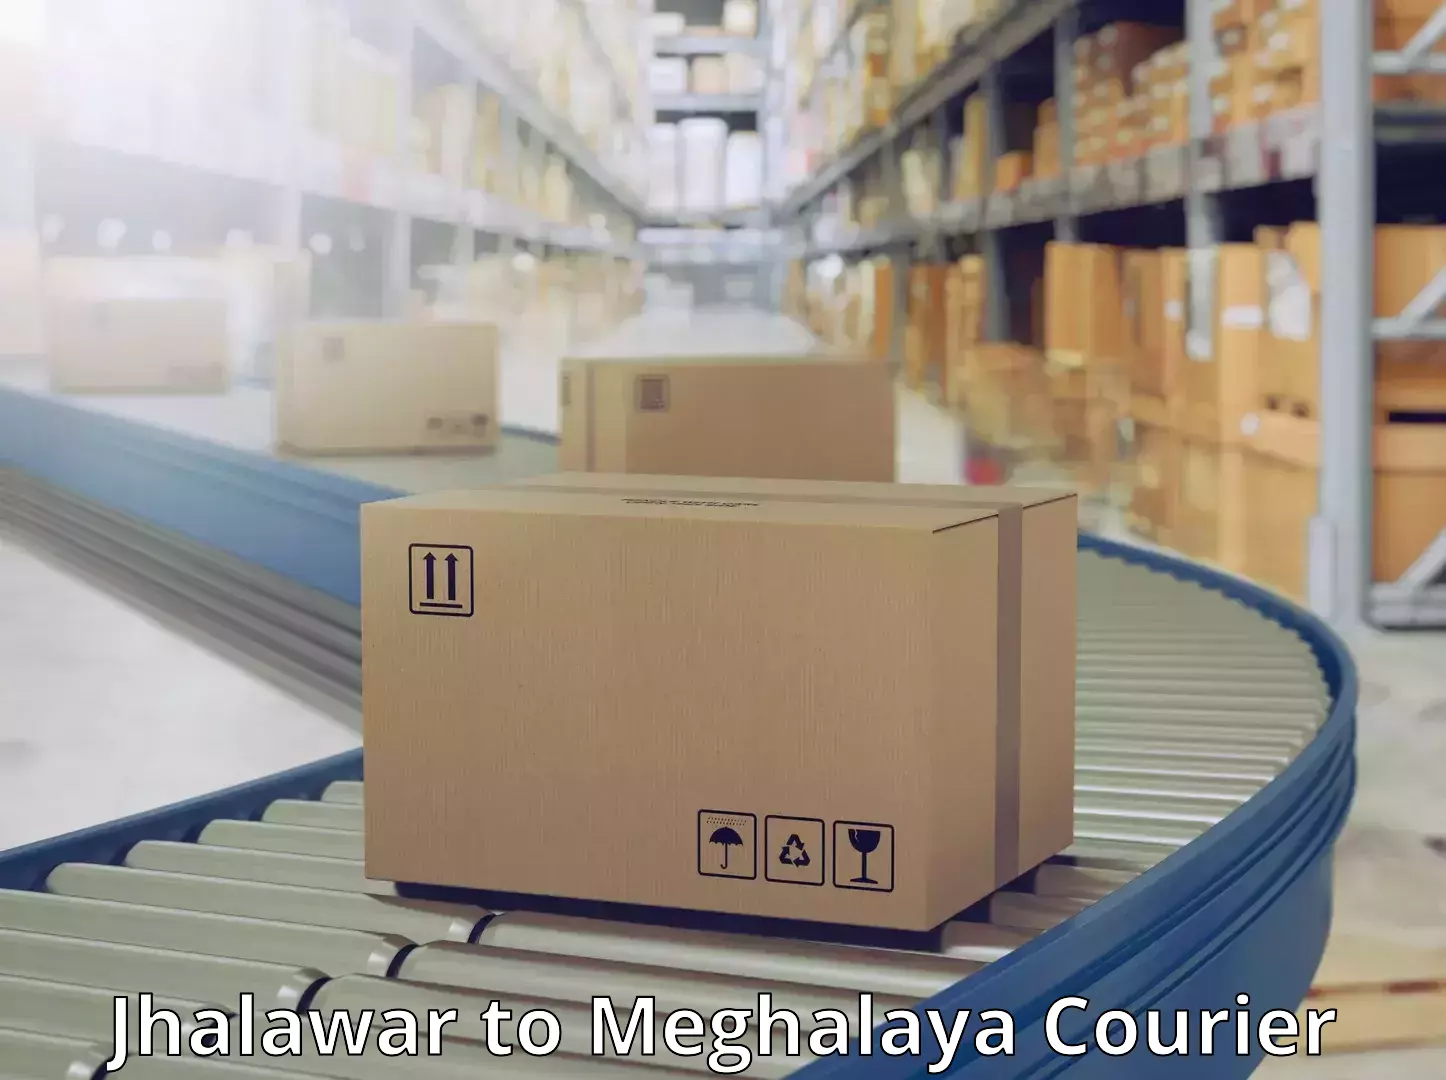 Courier service innovation Jhalawar to Meghalaya